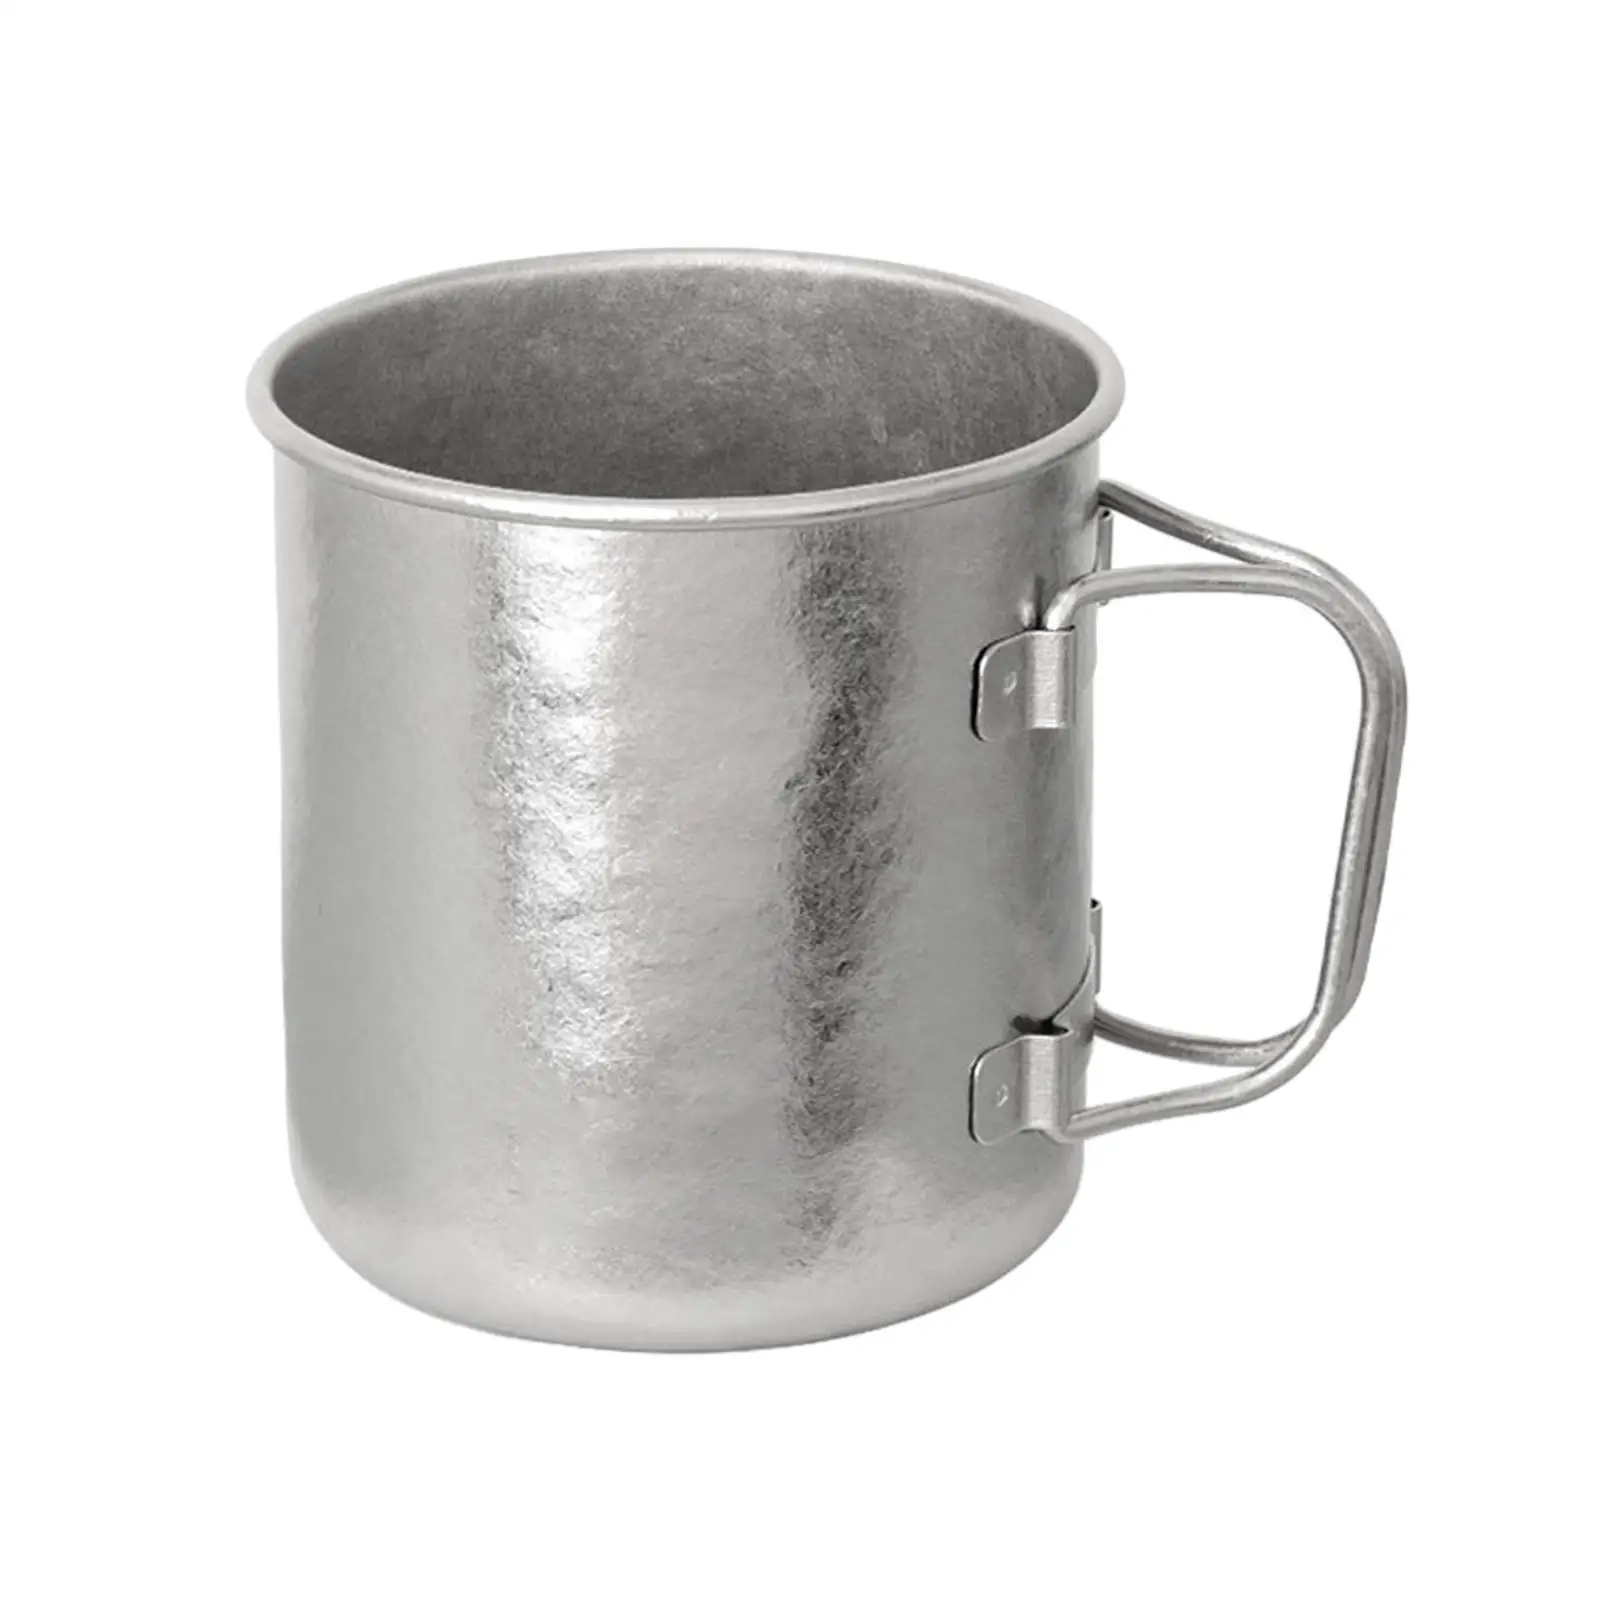 Titanium Mug with Folding Handles Coffee Tea Water Cup for Daily Use Picnics